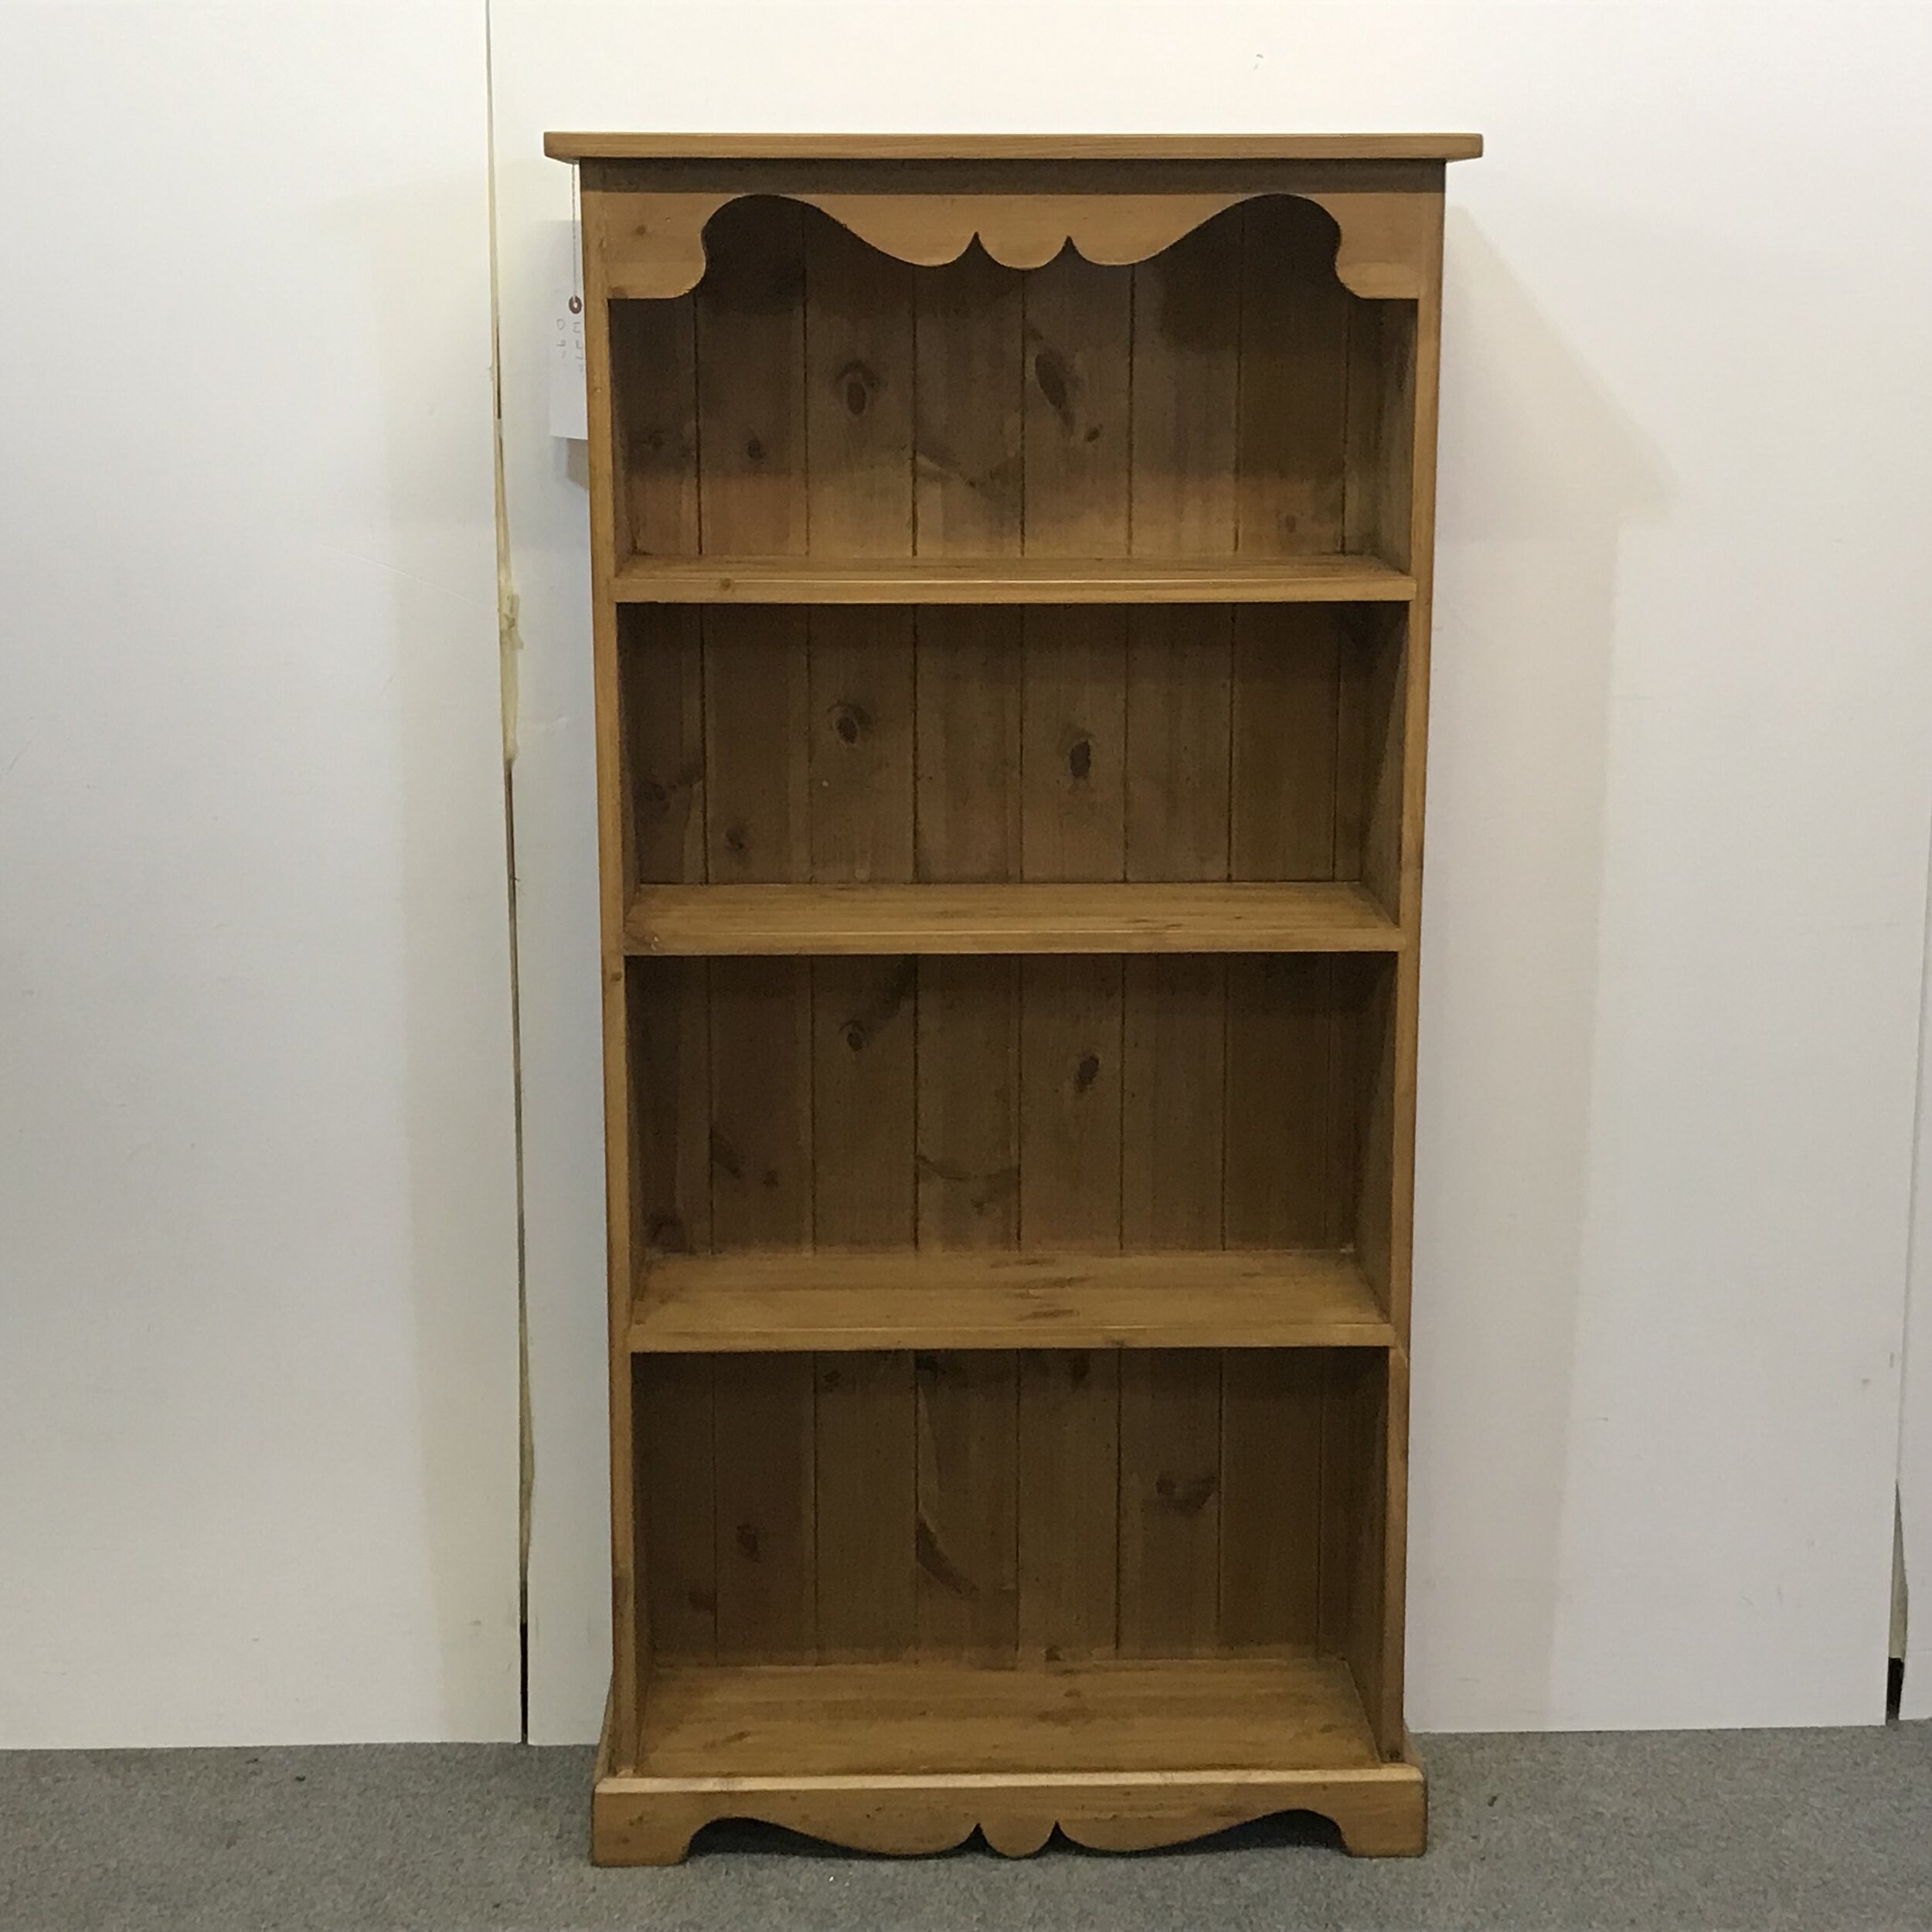 Handmade Slim Pine Bookcase With 3 Shelves Inside D6156a